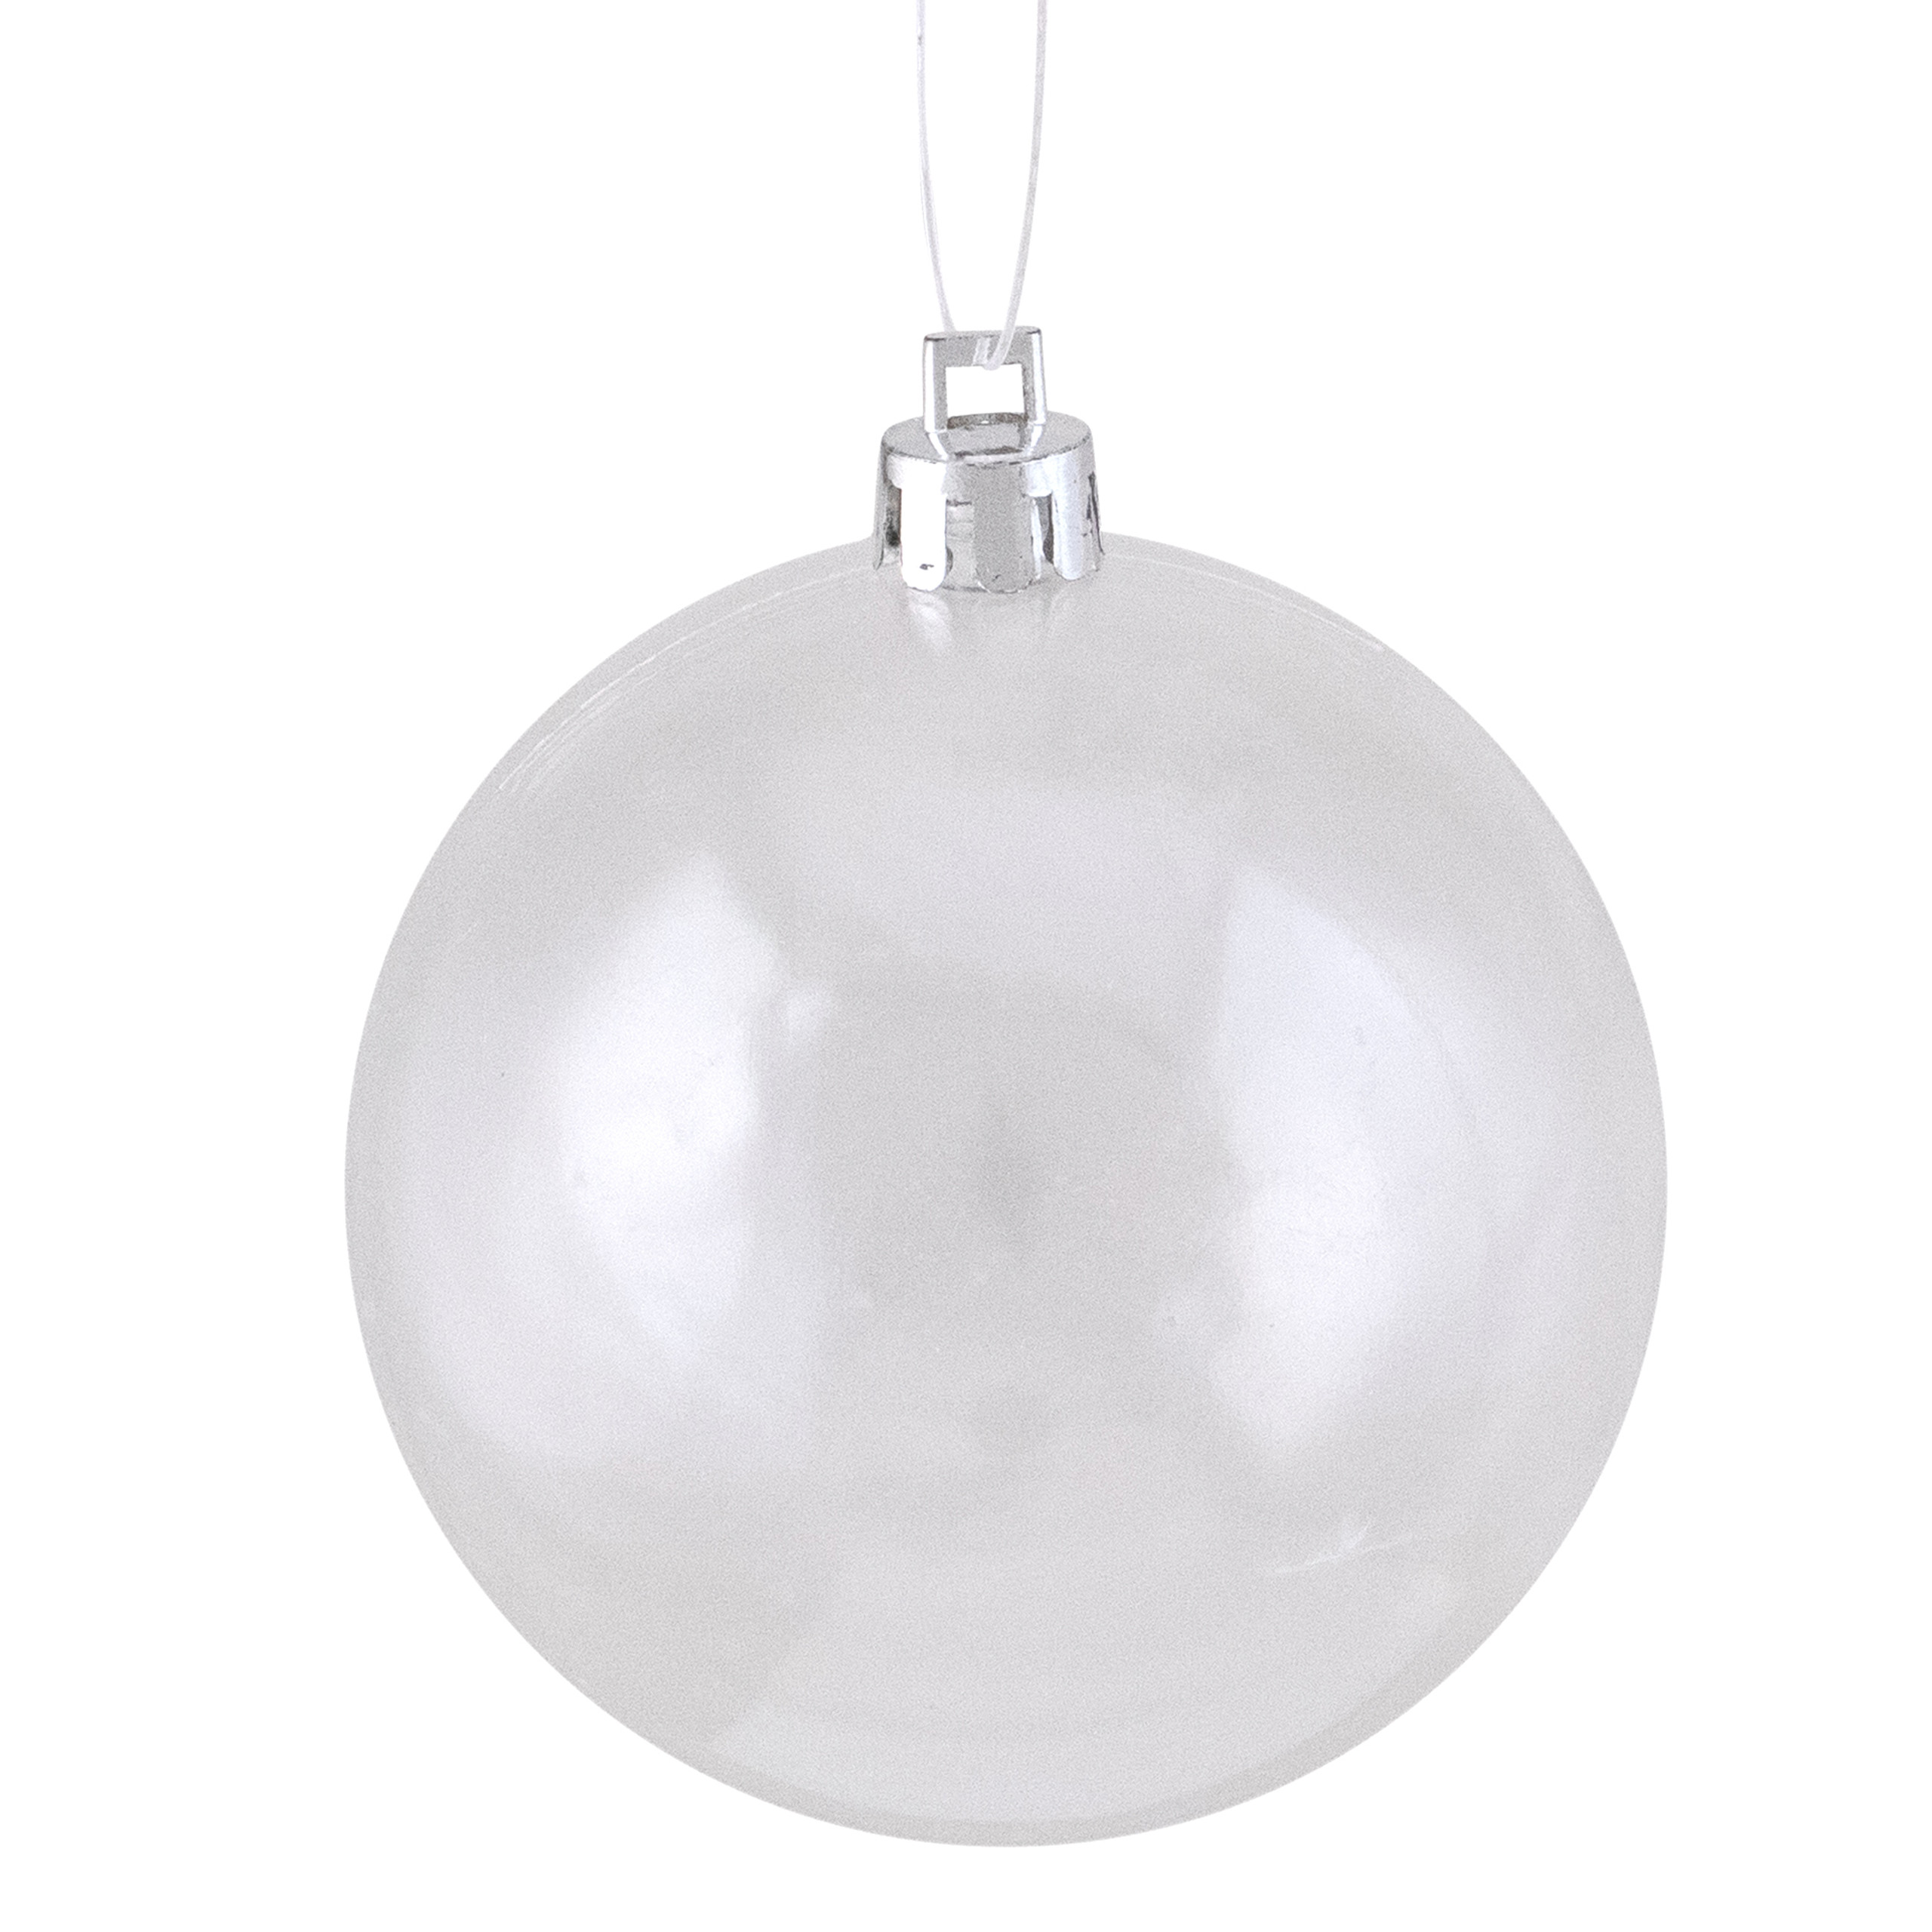 Shiny Clear Shatterproof Christmas Ball Ornament 2.75